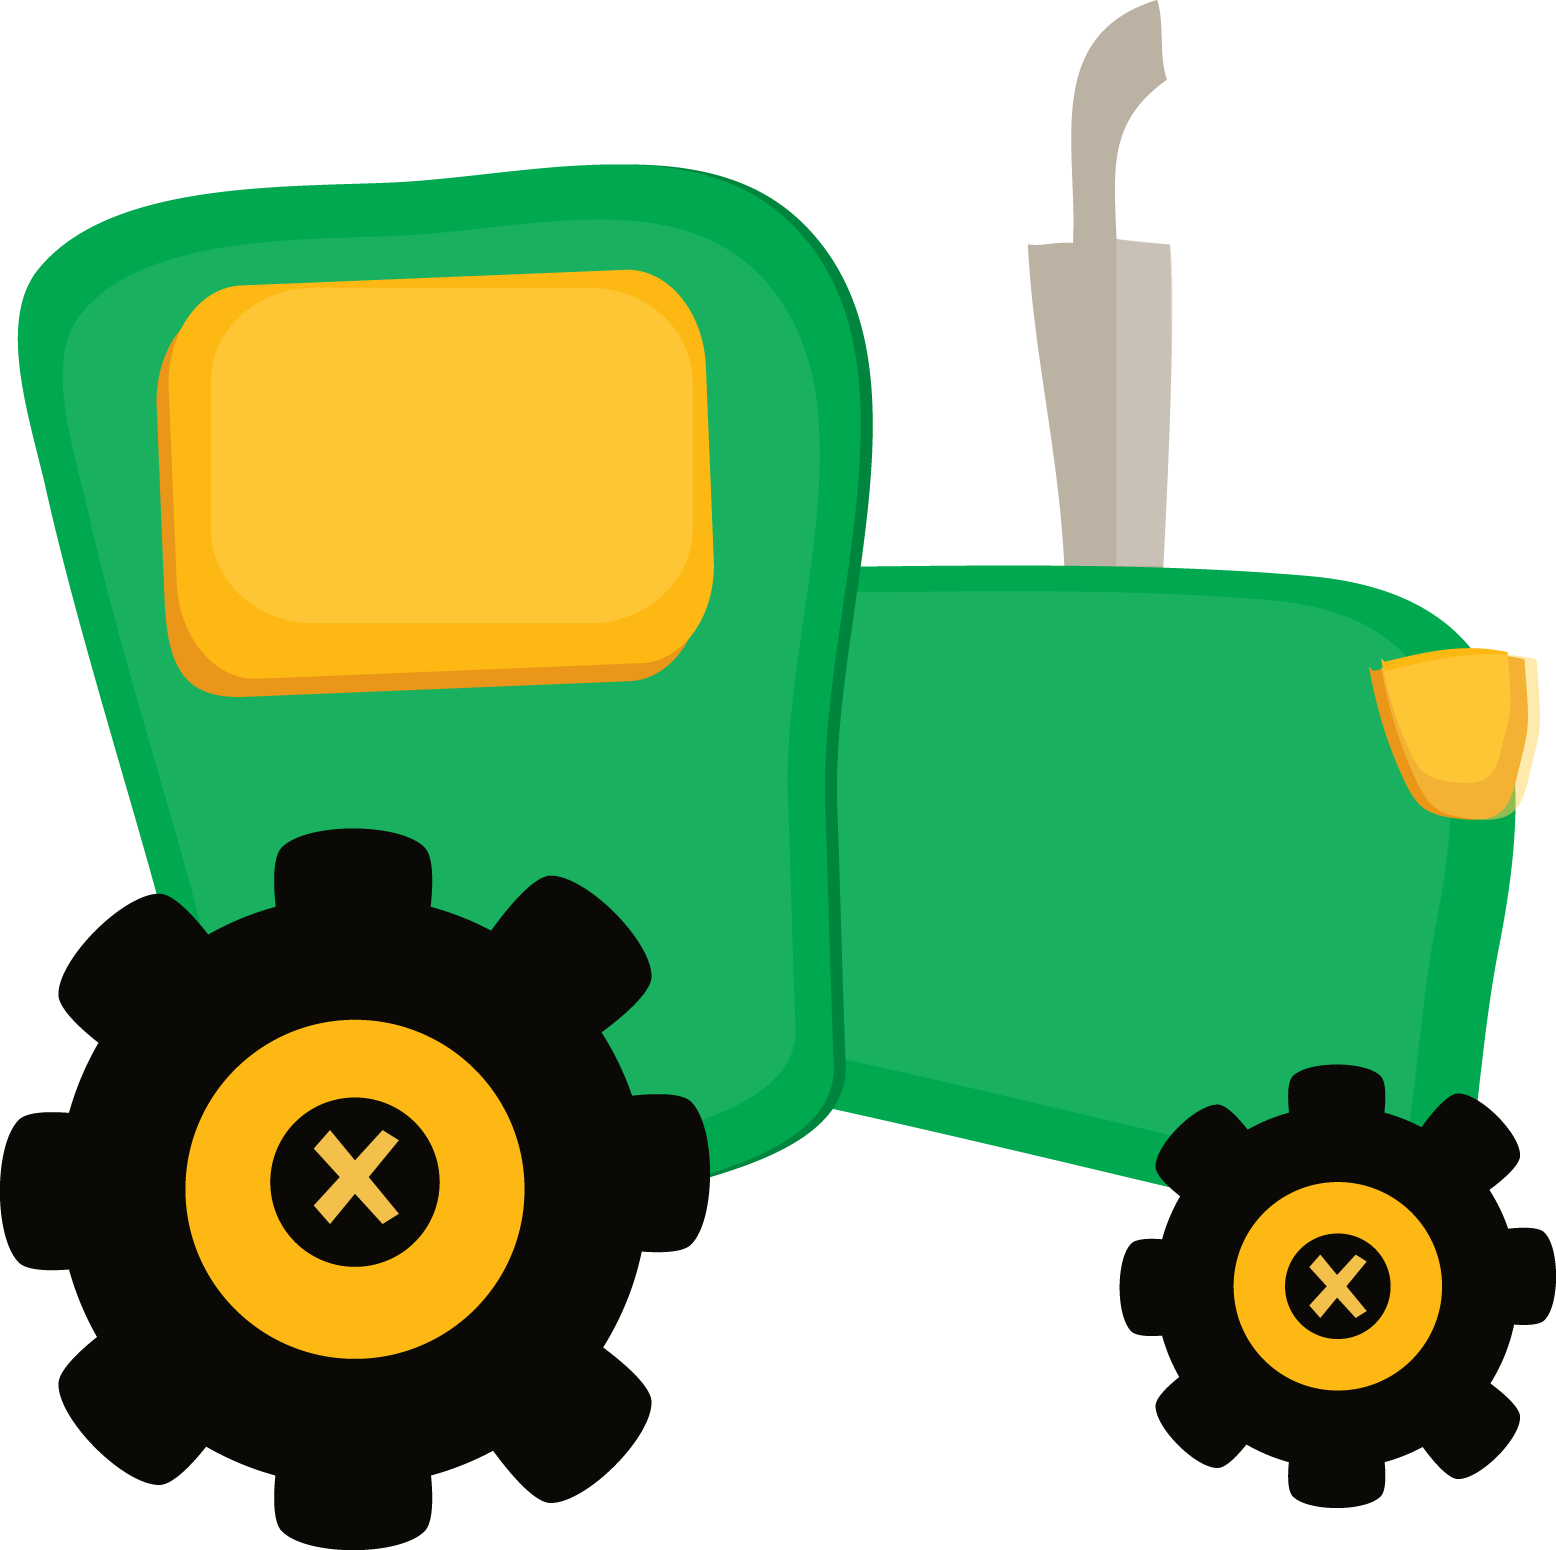 Farm Tractor Clip Art | Carto